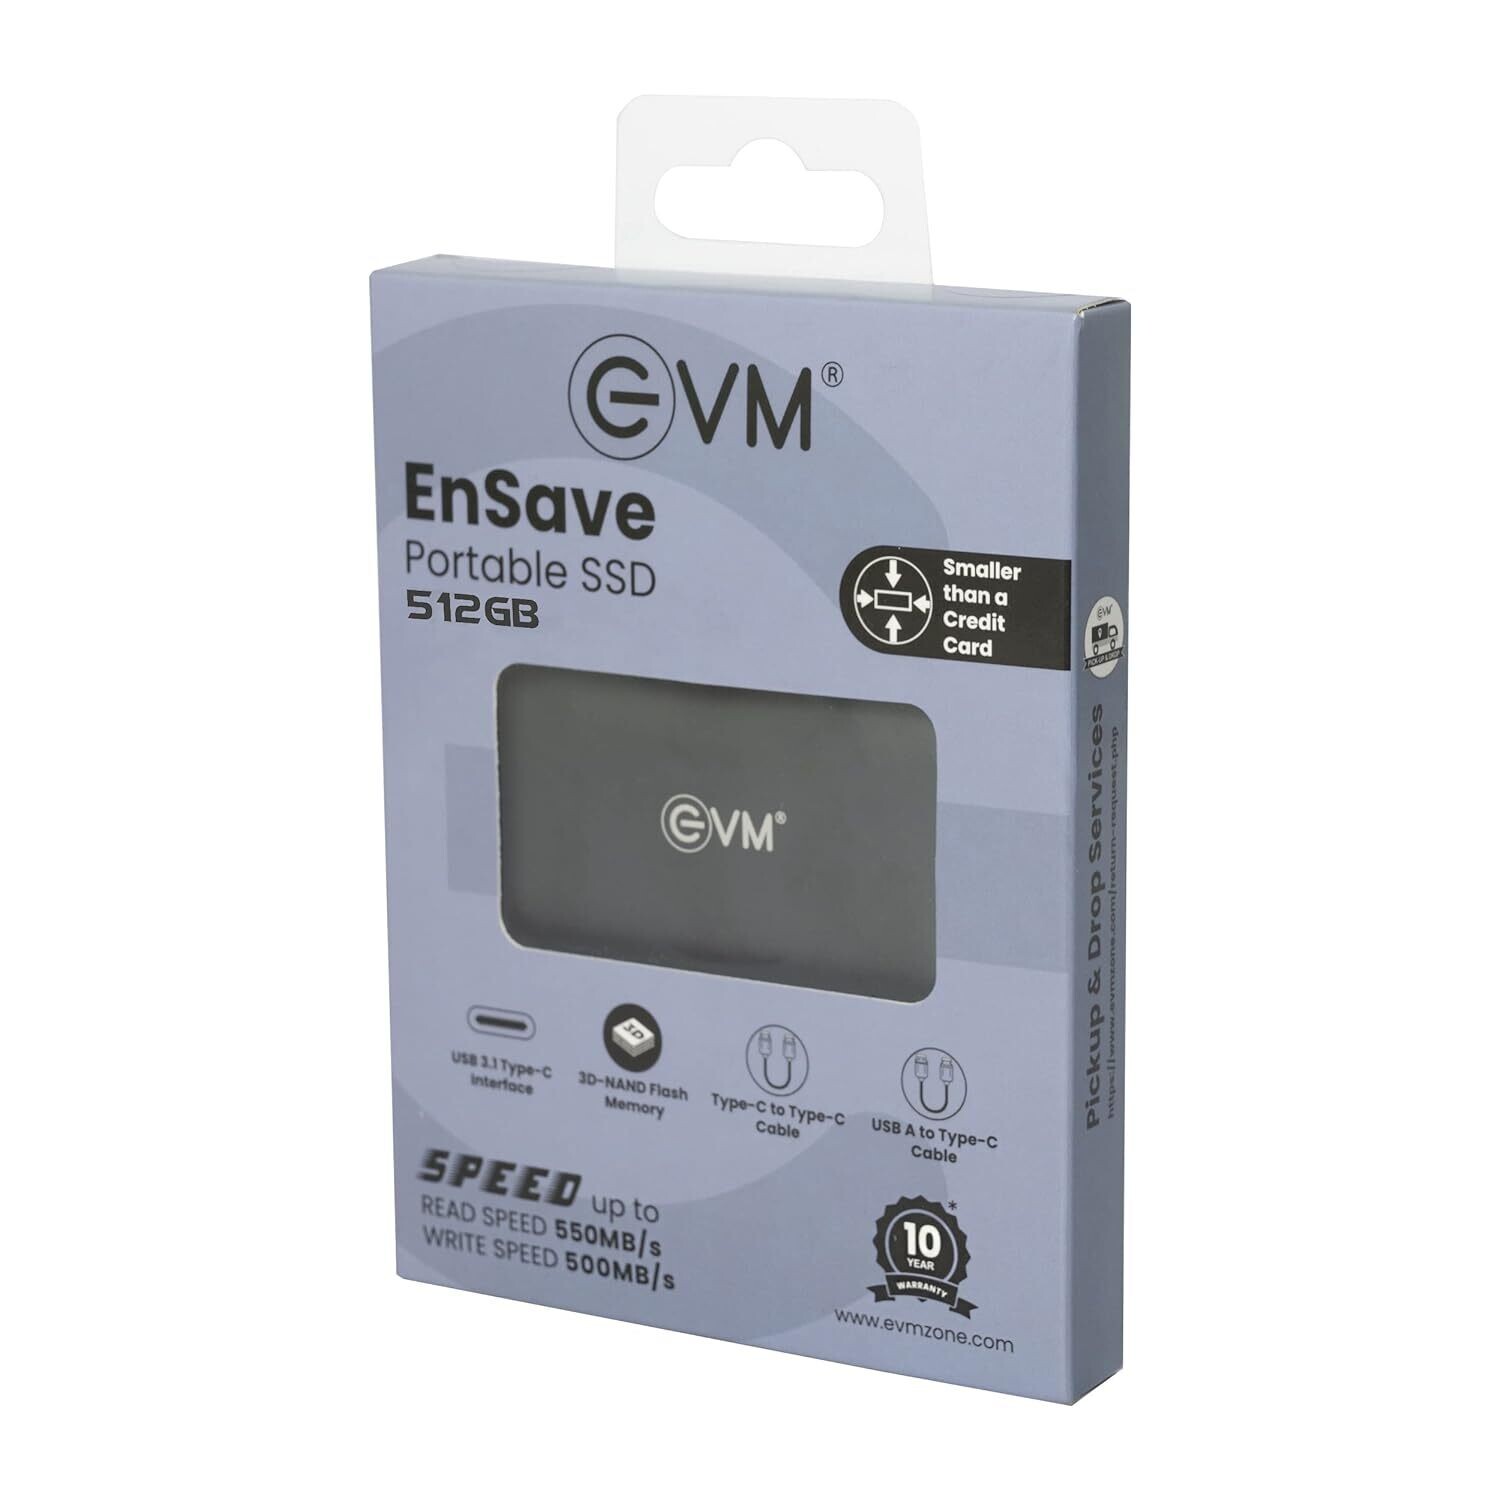 EVM EnSave 512GB 500Mb/s SSD